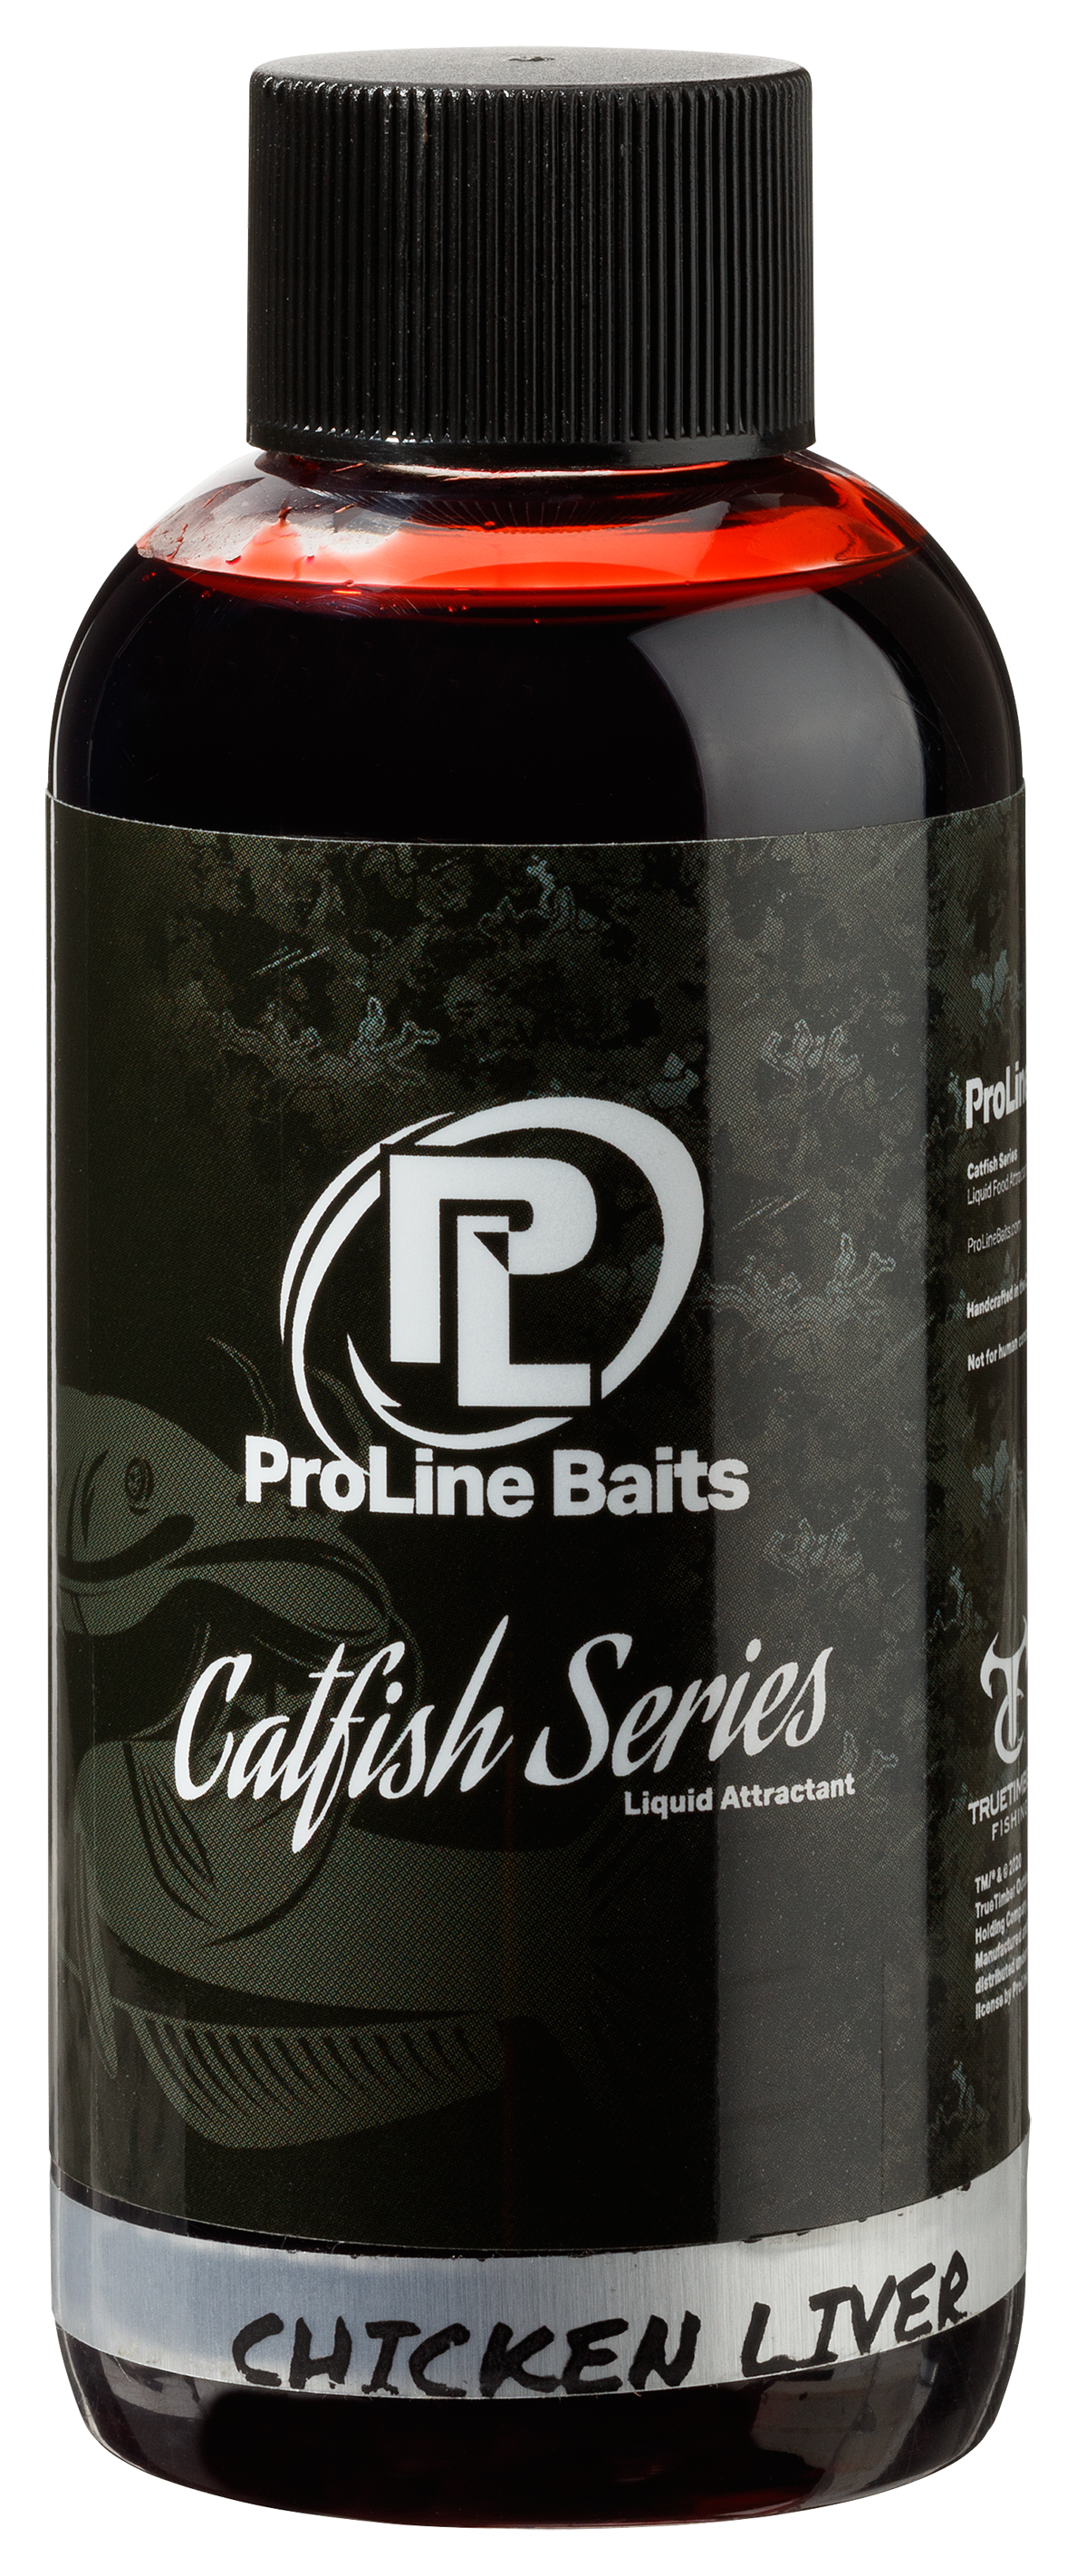 Proline Baits Catfish Series Fish Attractant - Natural Shad